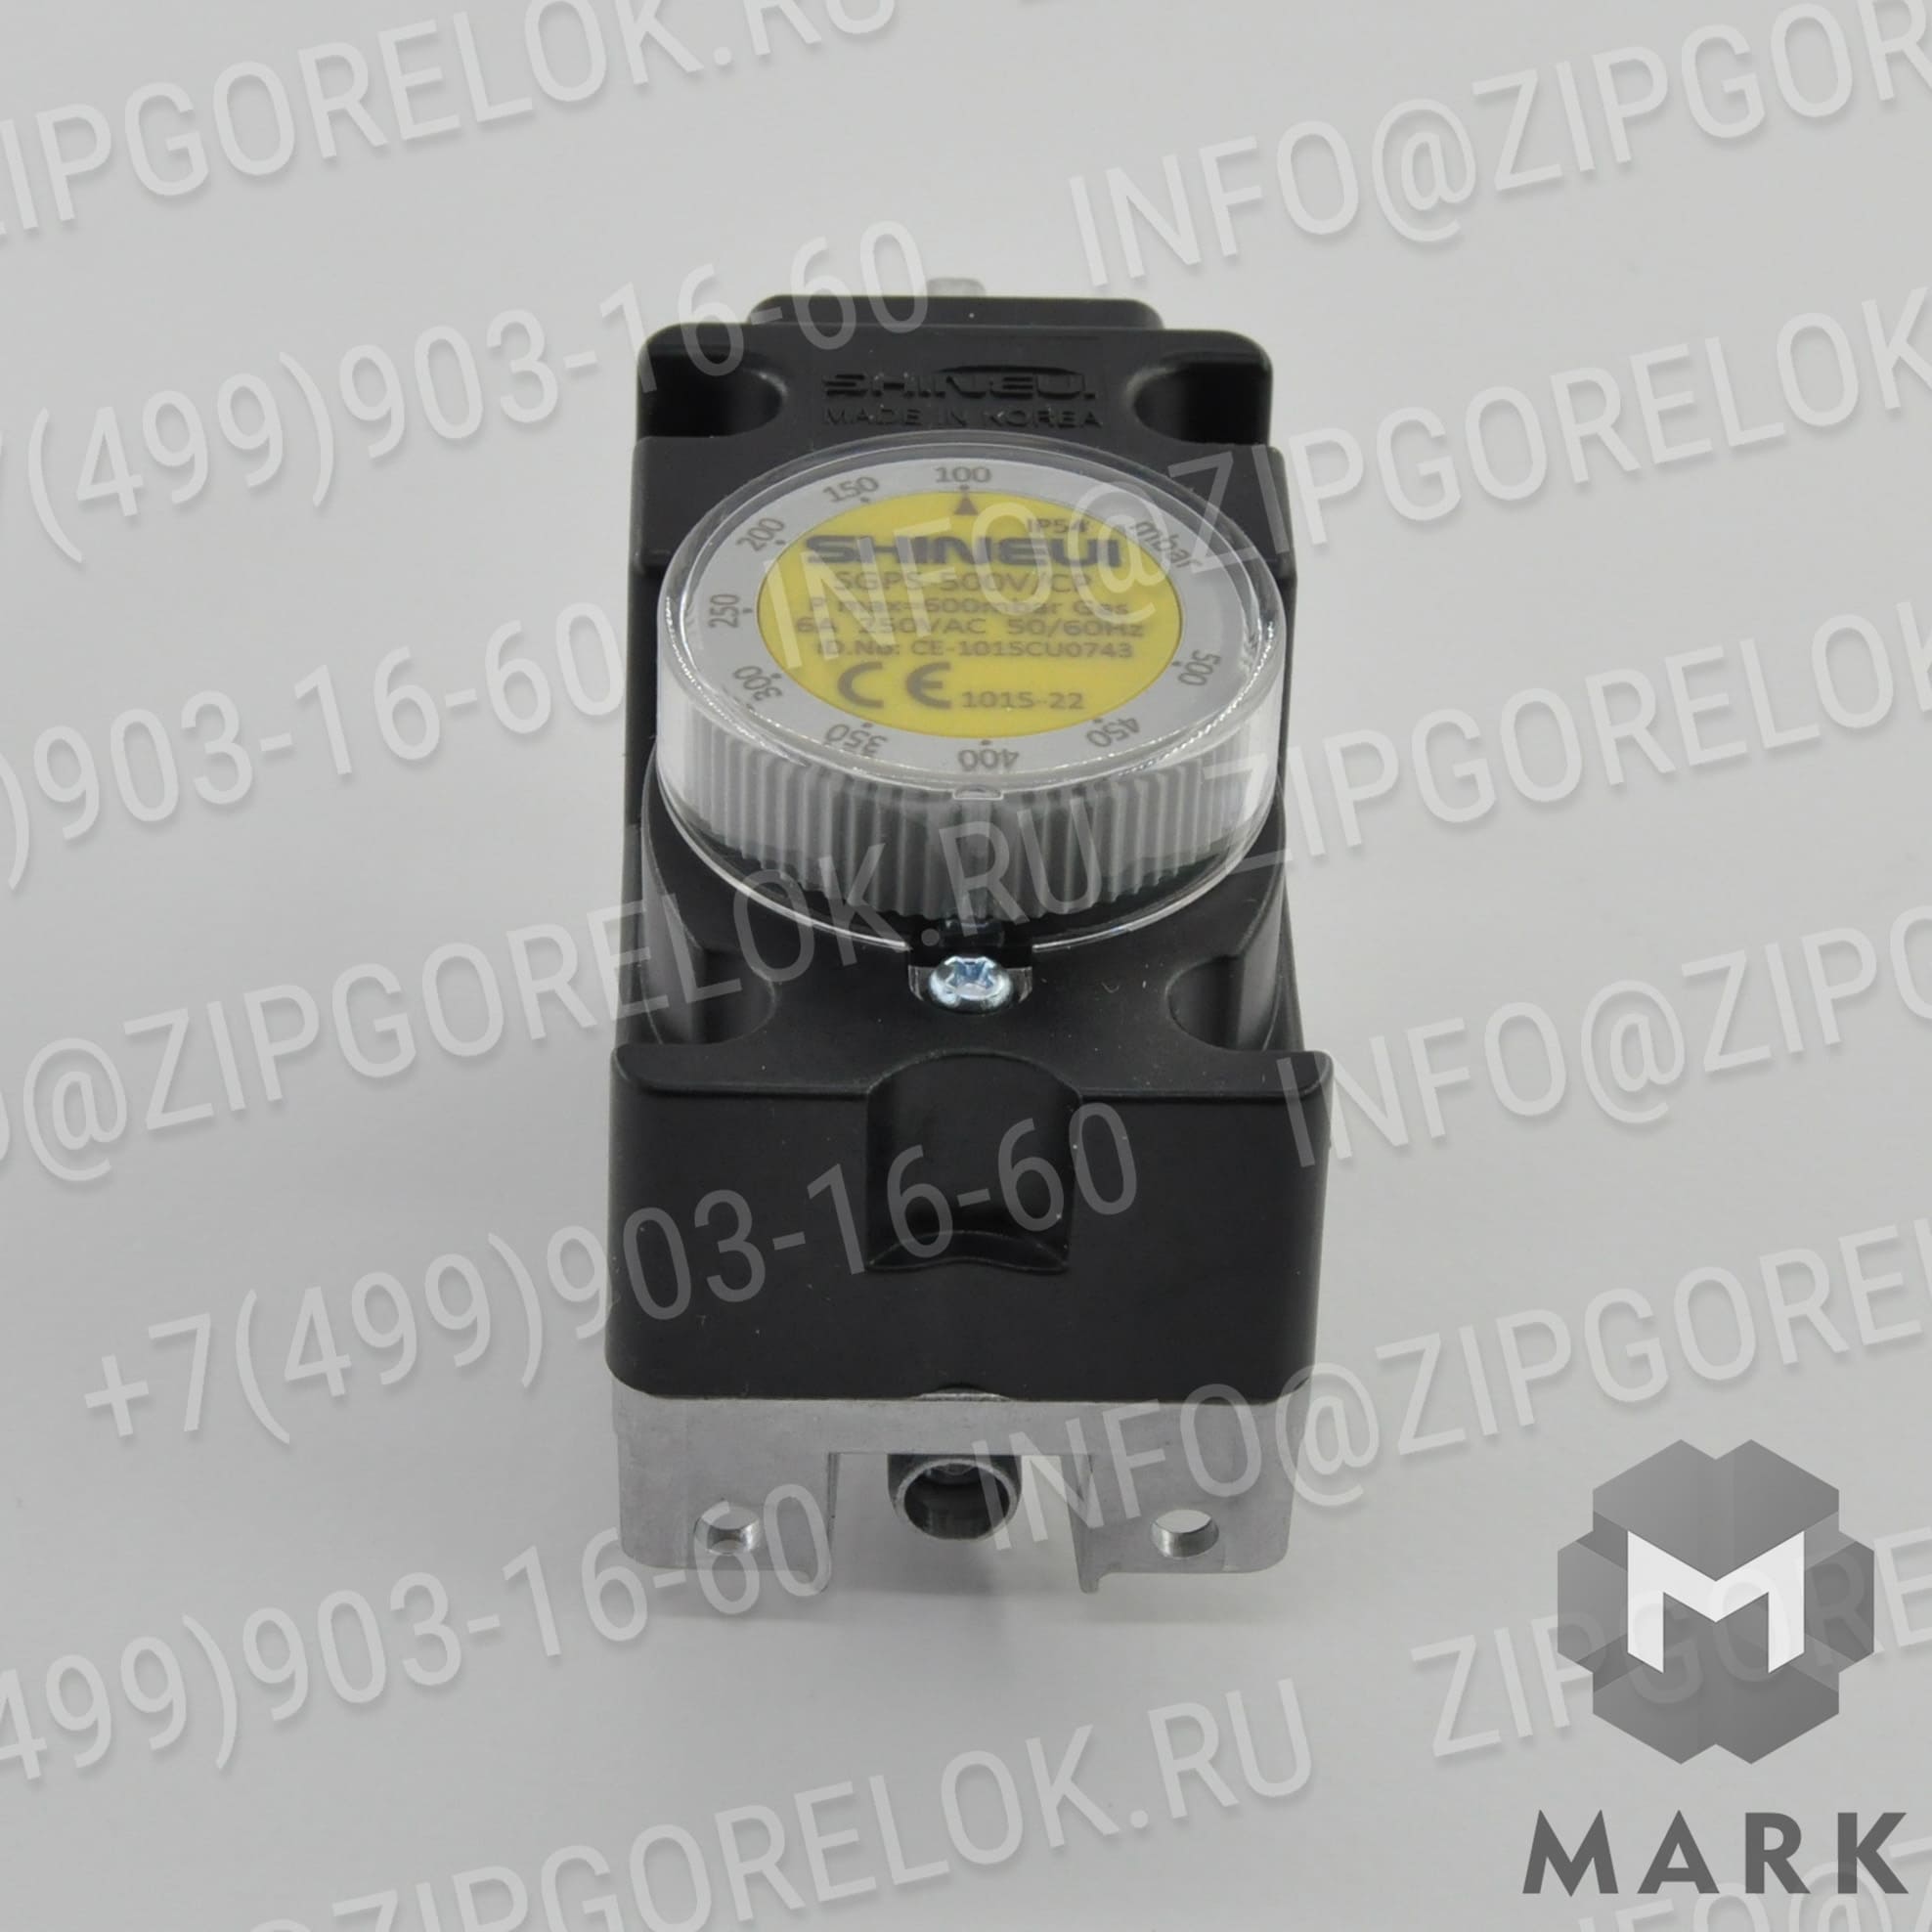 SGPS-500V-CP Купить 3008842 Труба Riello / Риелло | Zipgorelok.ru